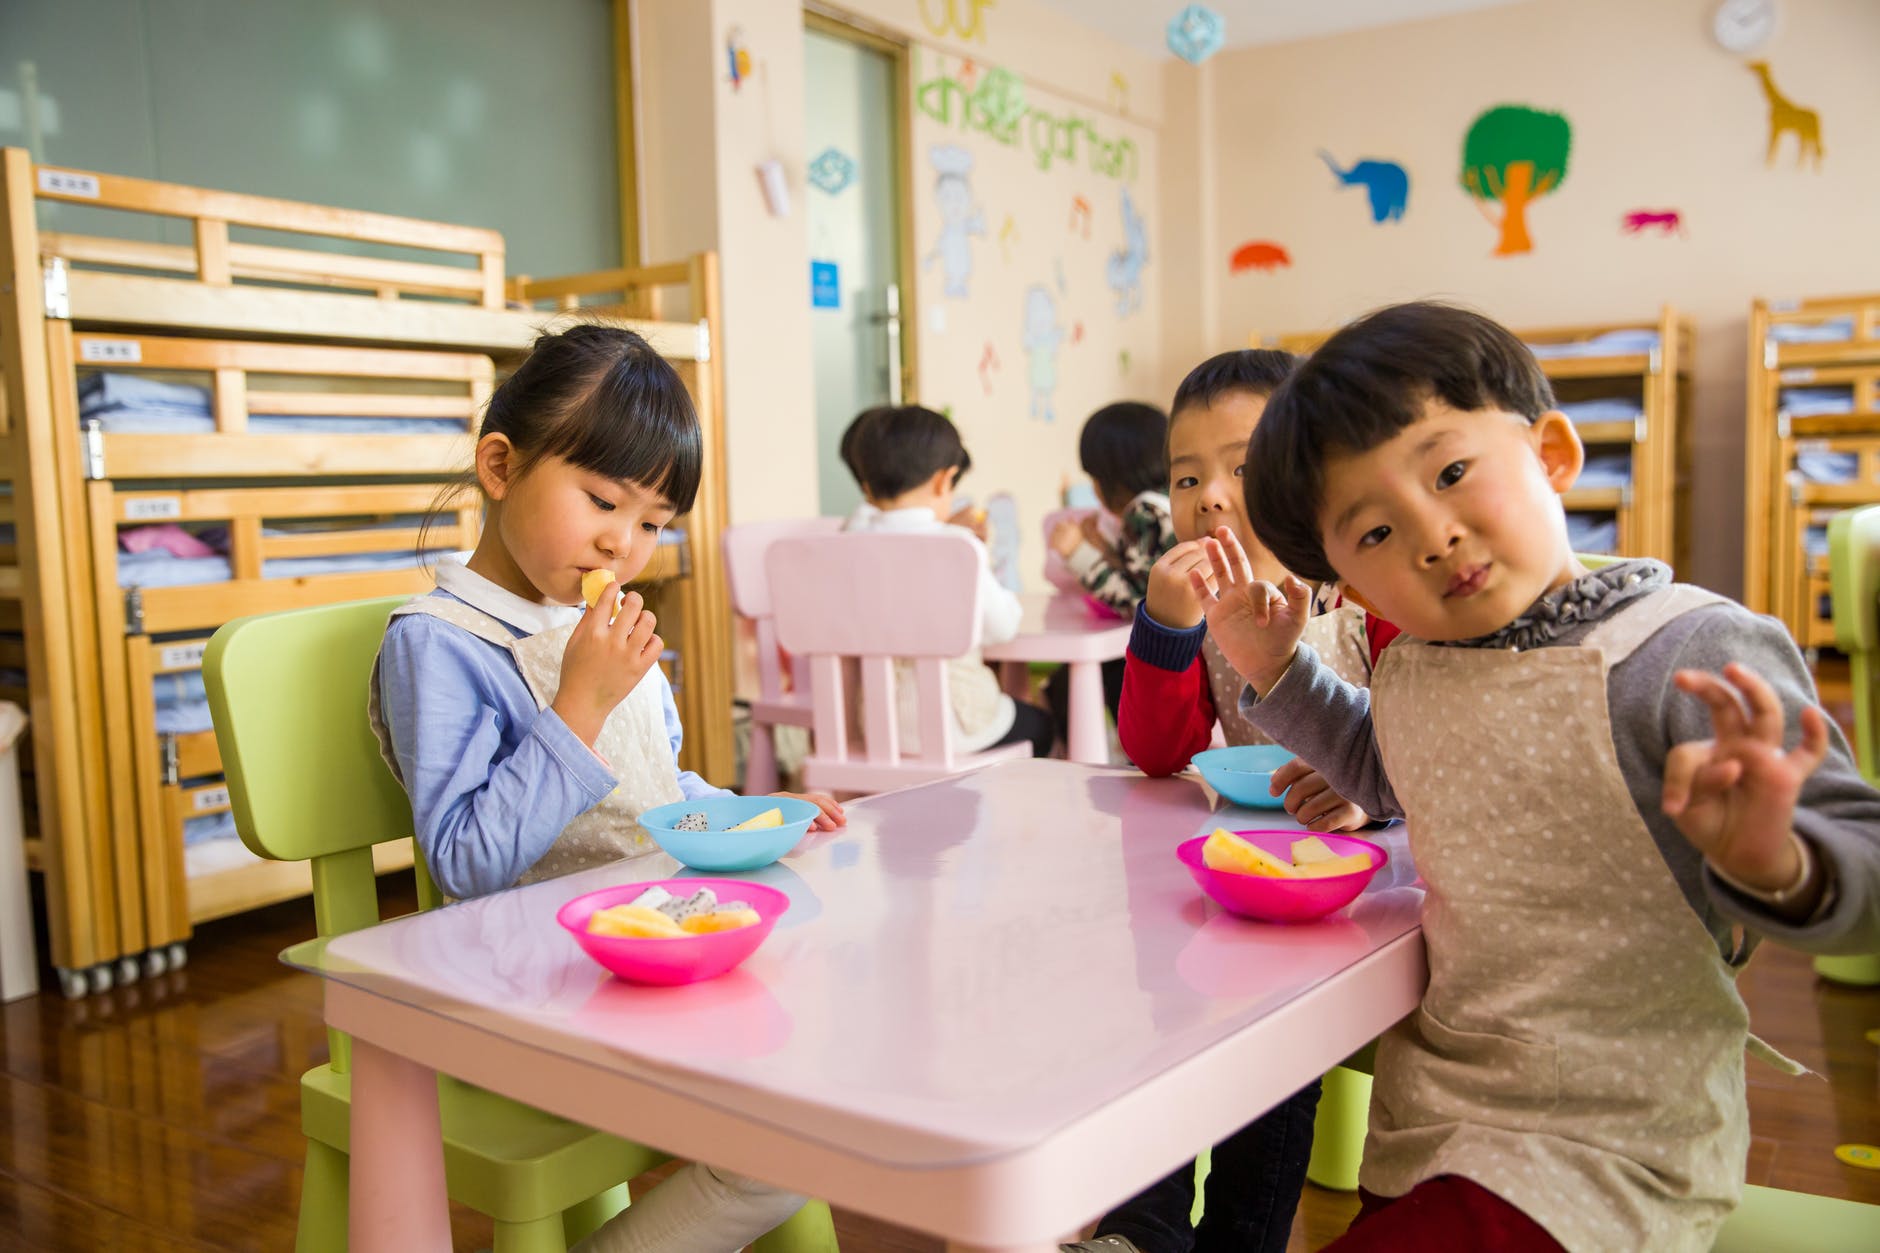 Children in a kindergarten eating a snack